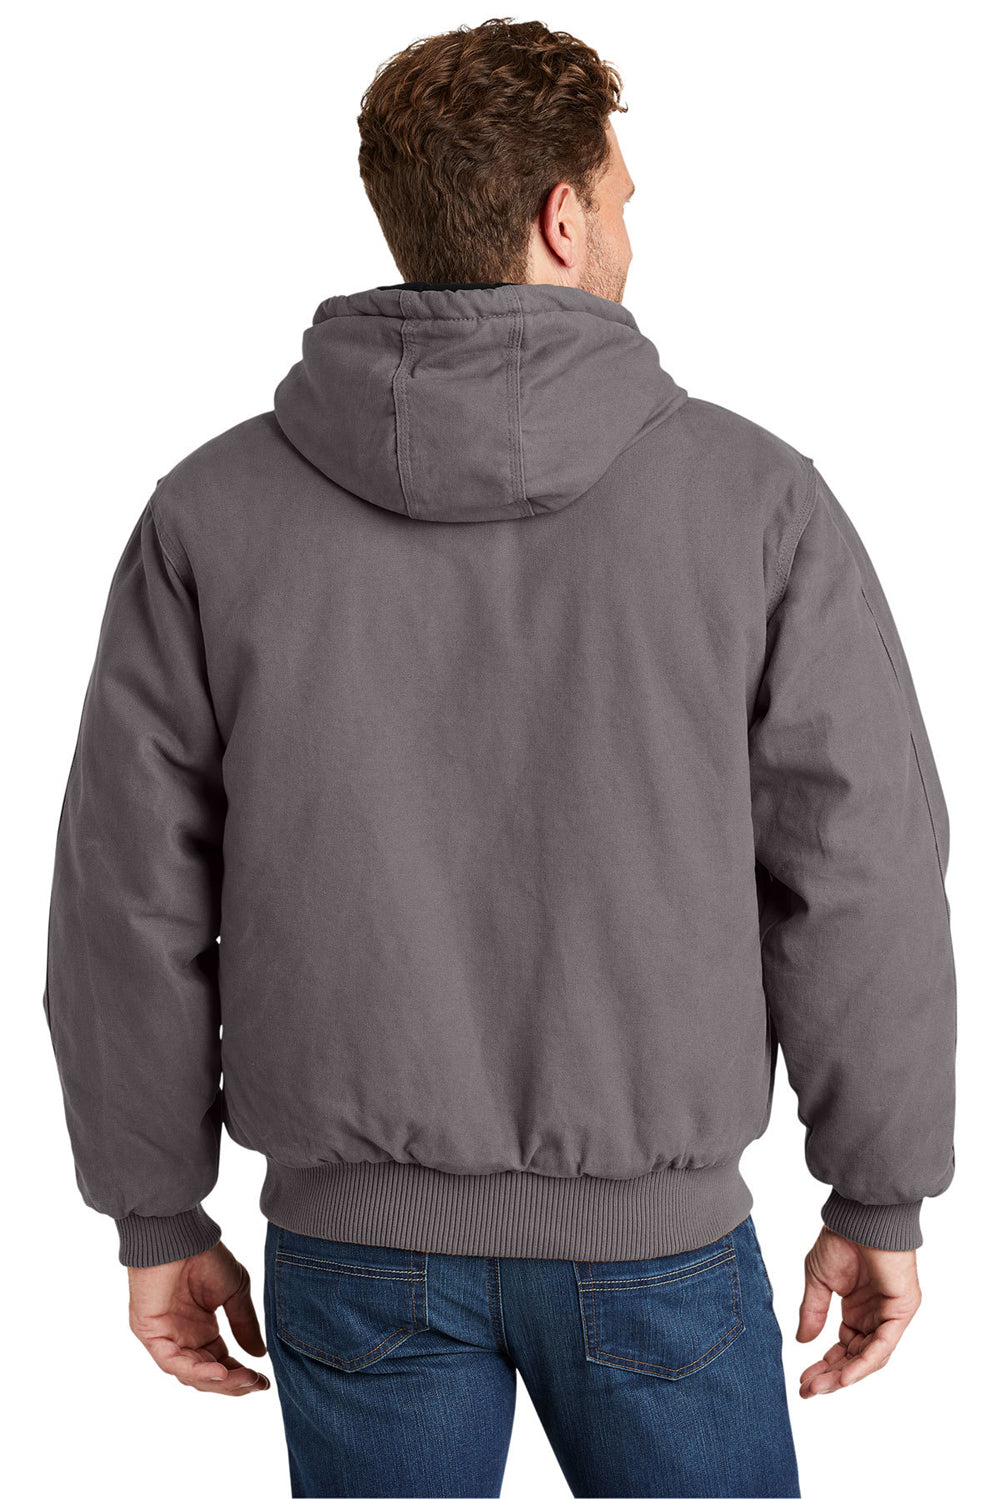 CornerStone CSJ41 Mens Duck Cloth Full Zip Hooded Jacket Metal Grey Back